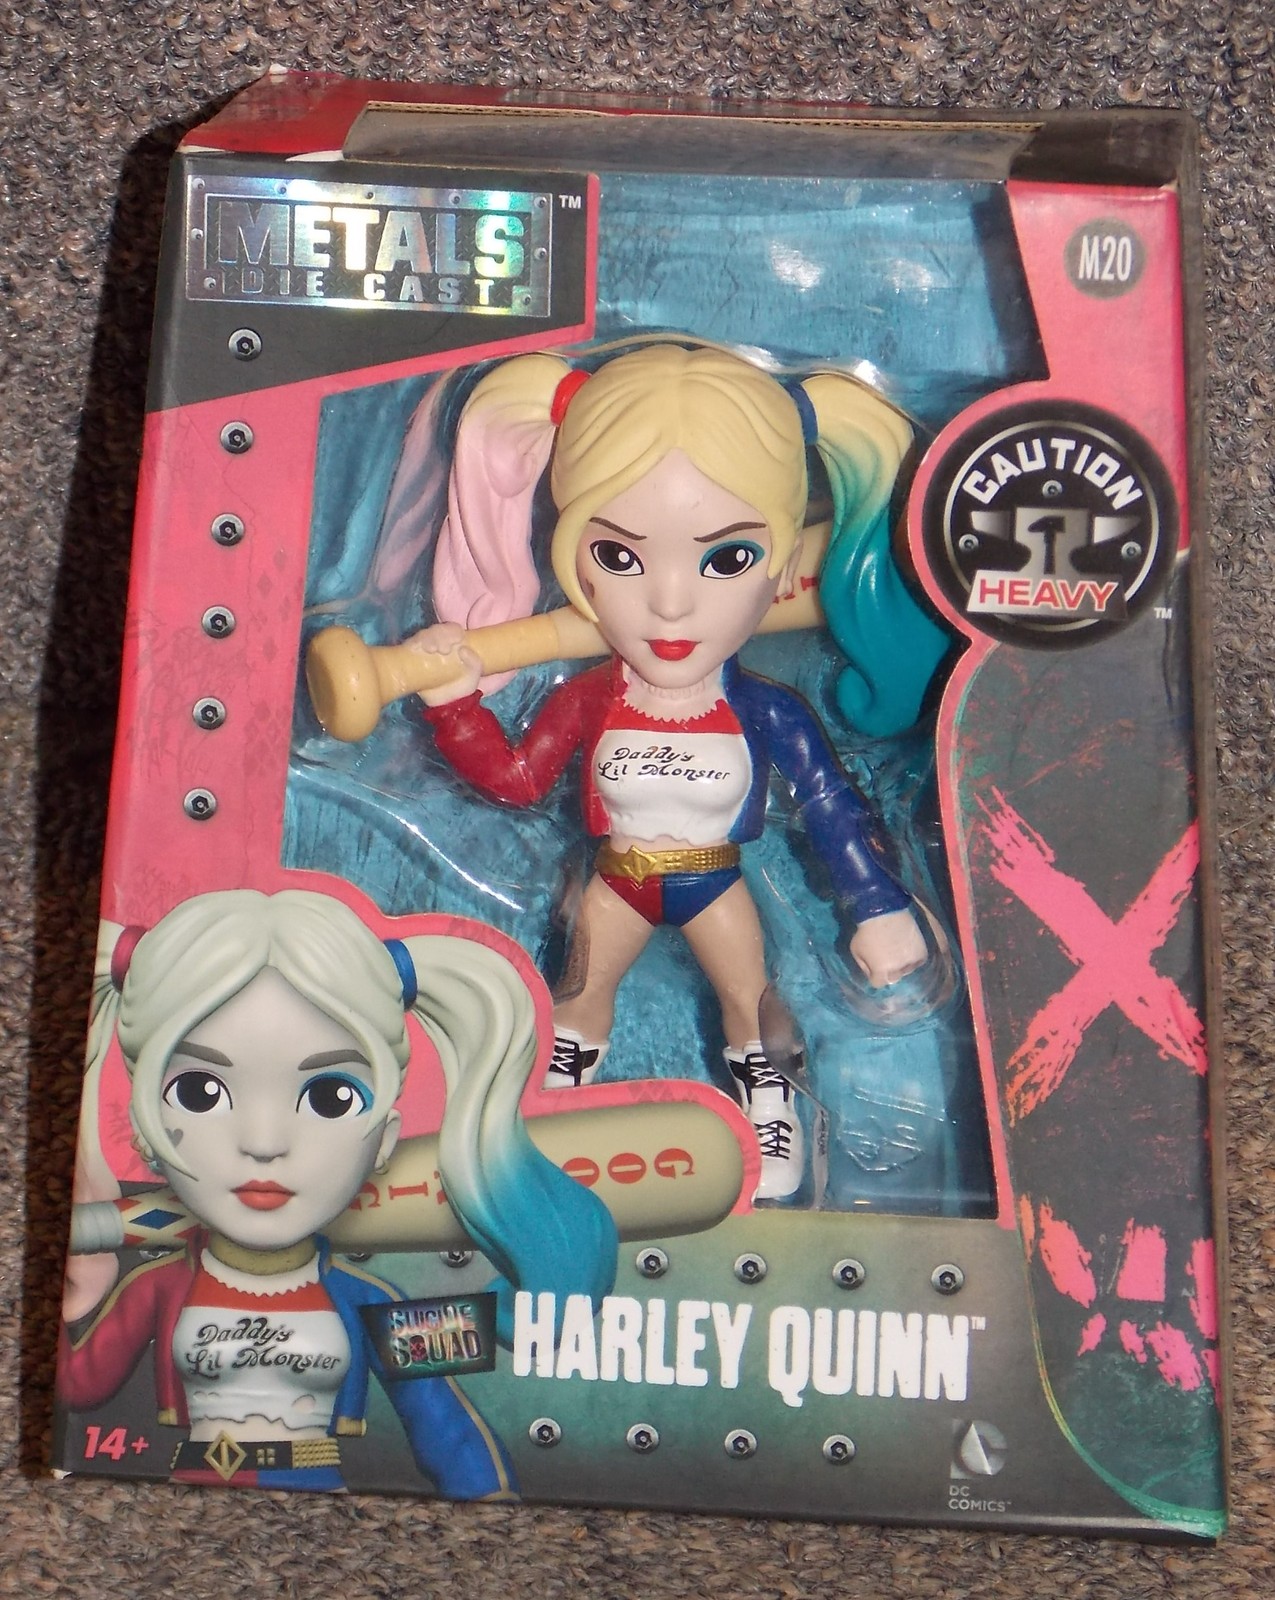 2016 DC Comics Suicide Squad Harley Quinn 4 inch Metal Die Cast Figure New - $24.99